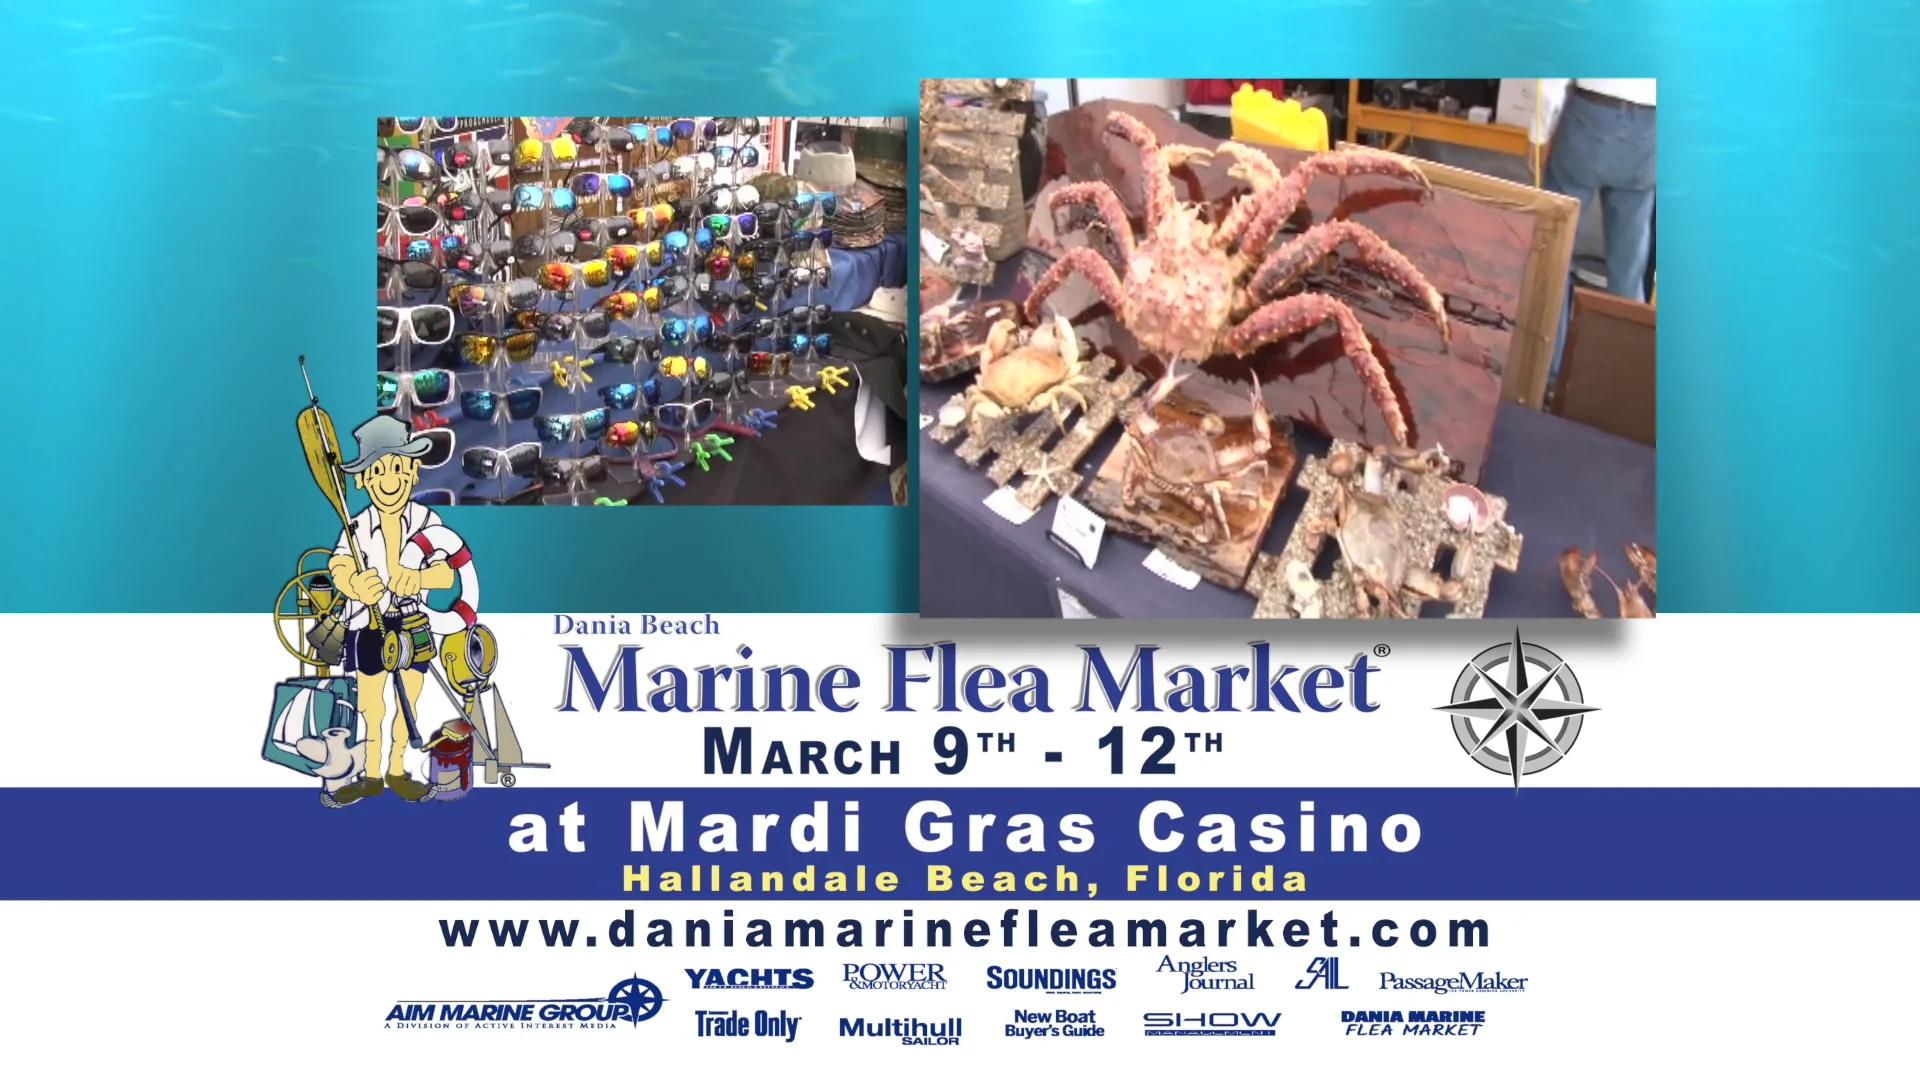 Baldrica Spots Dania Marine Flea Market 2017 for approval on Vimeo